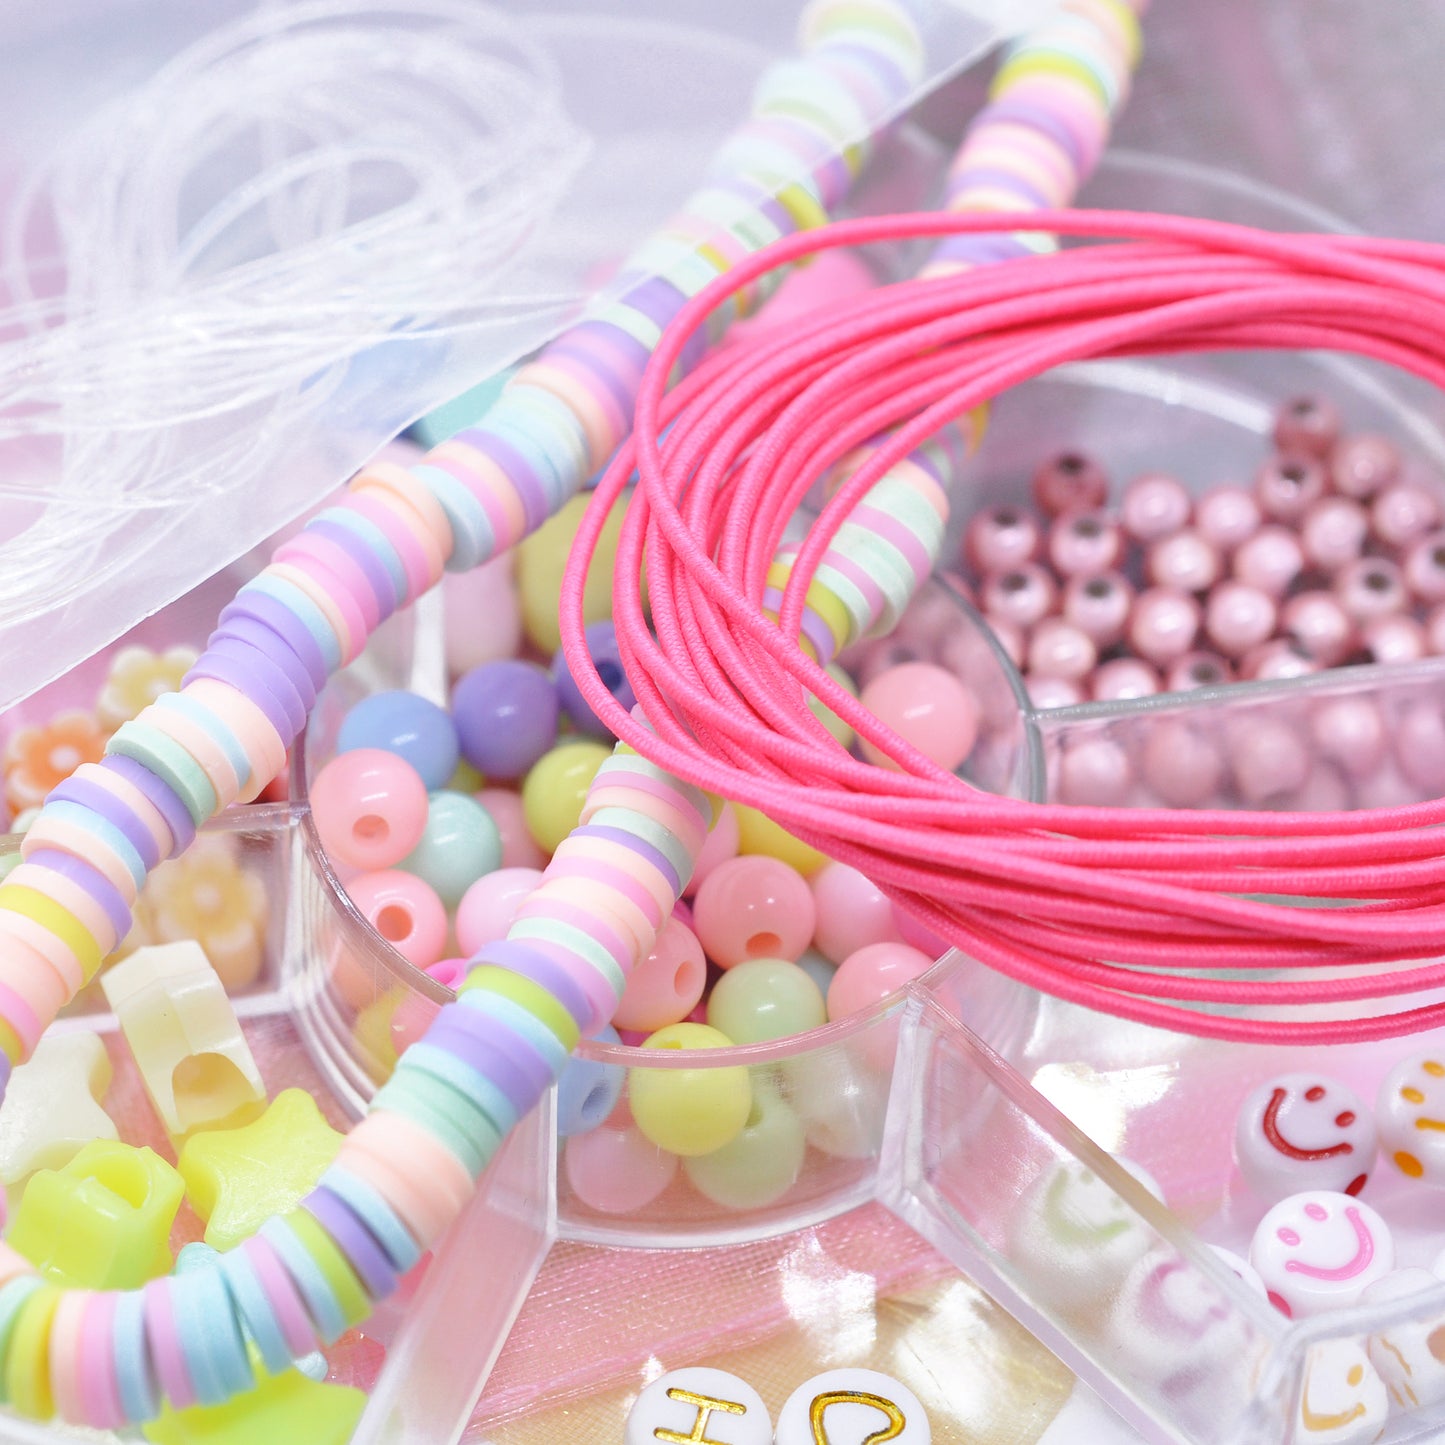 Handicraft set "HAPPY" / colorful beads / Katsuki / organza bags &amp; more